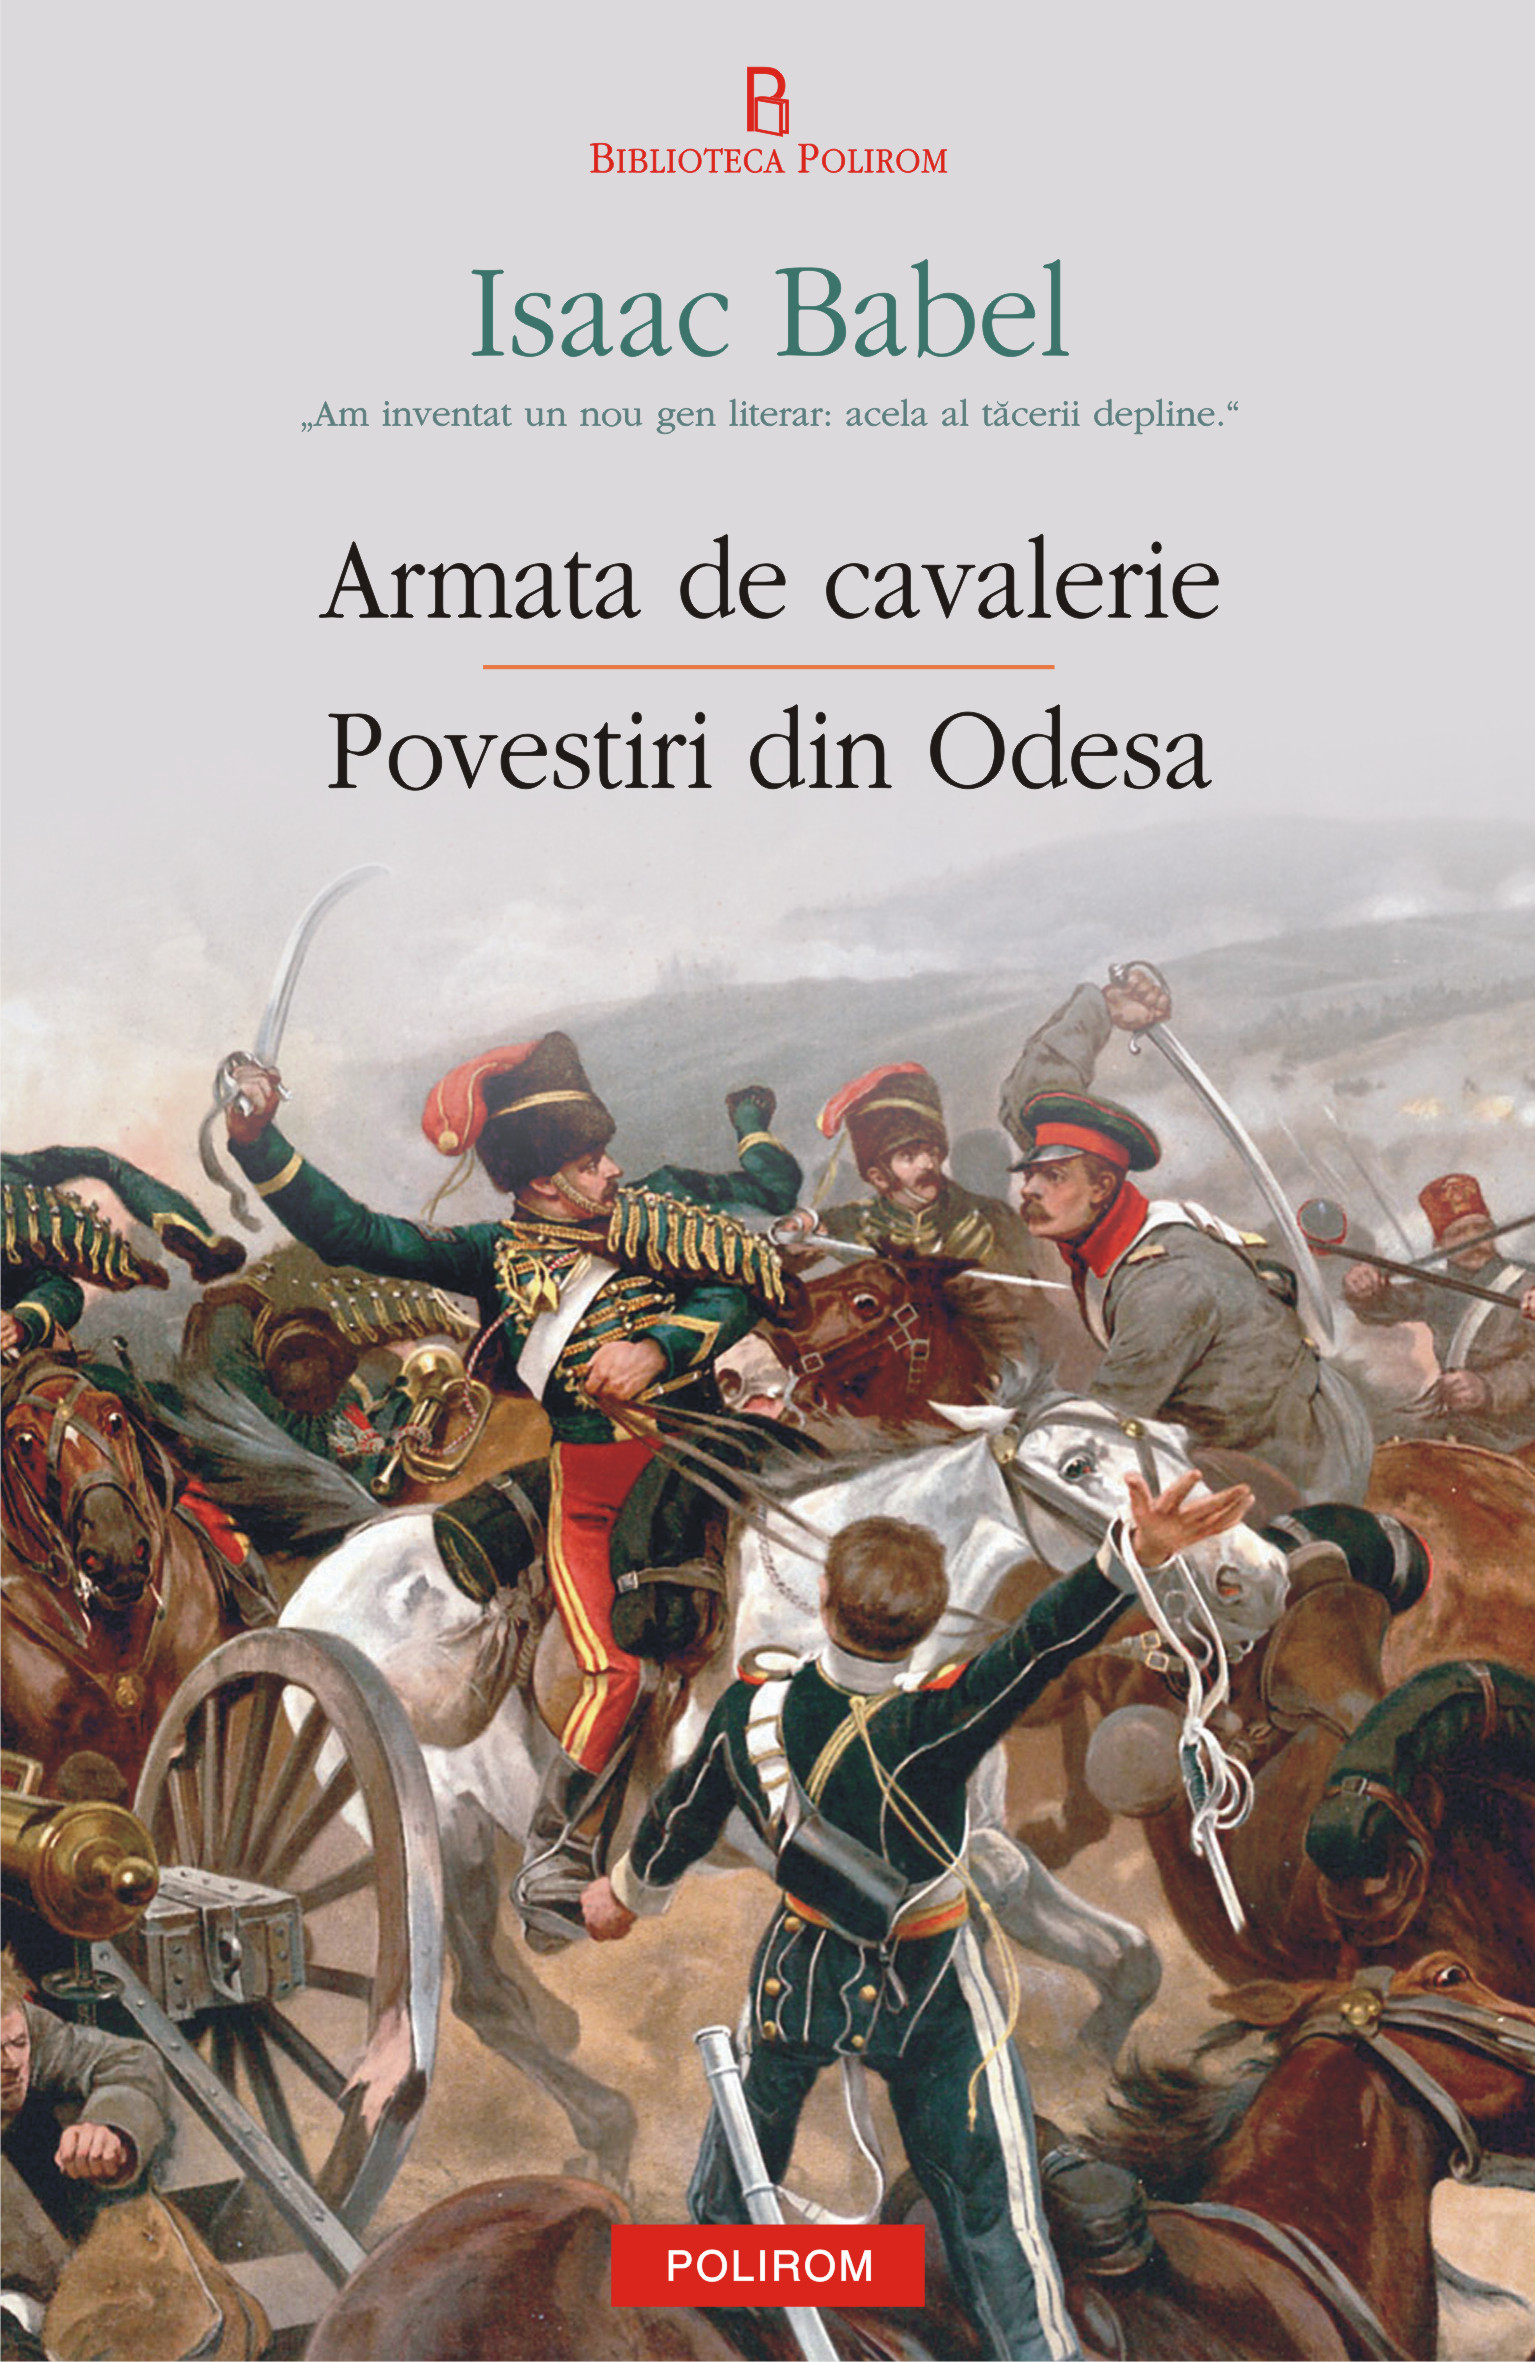 eBook Armata de cavalerie. Povestiri din Odesa - Isaac Babel